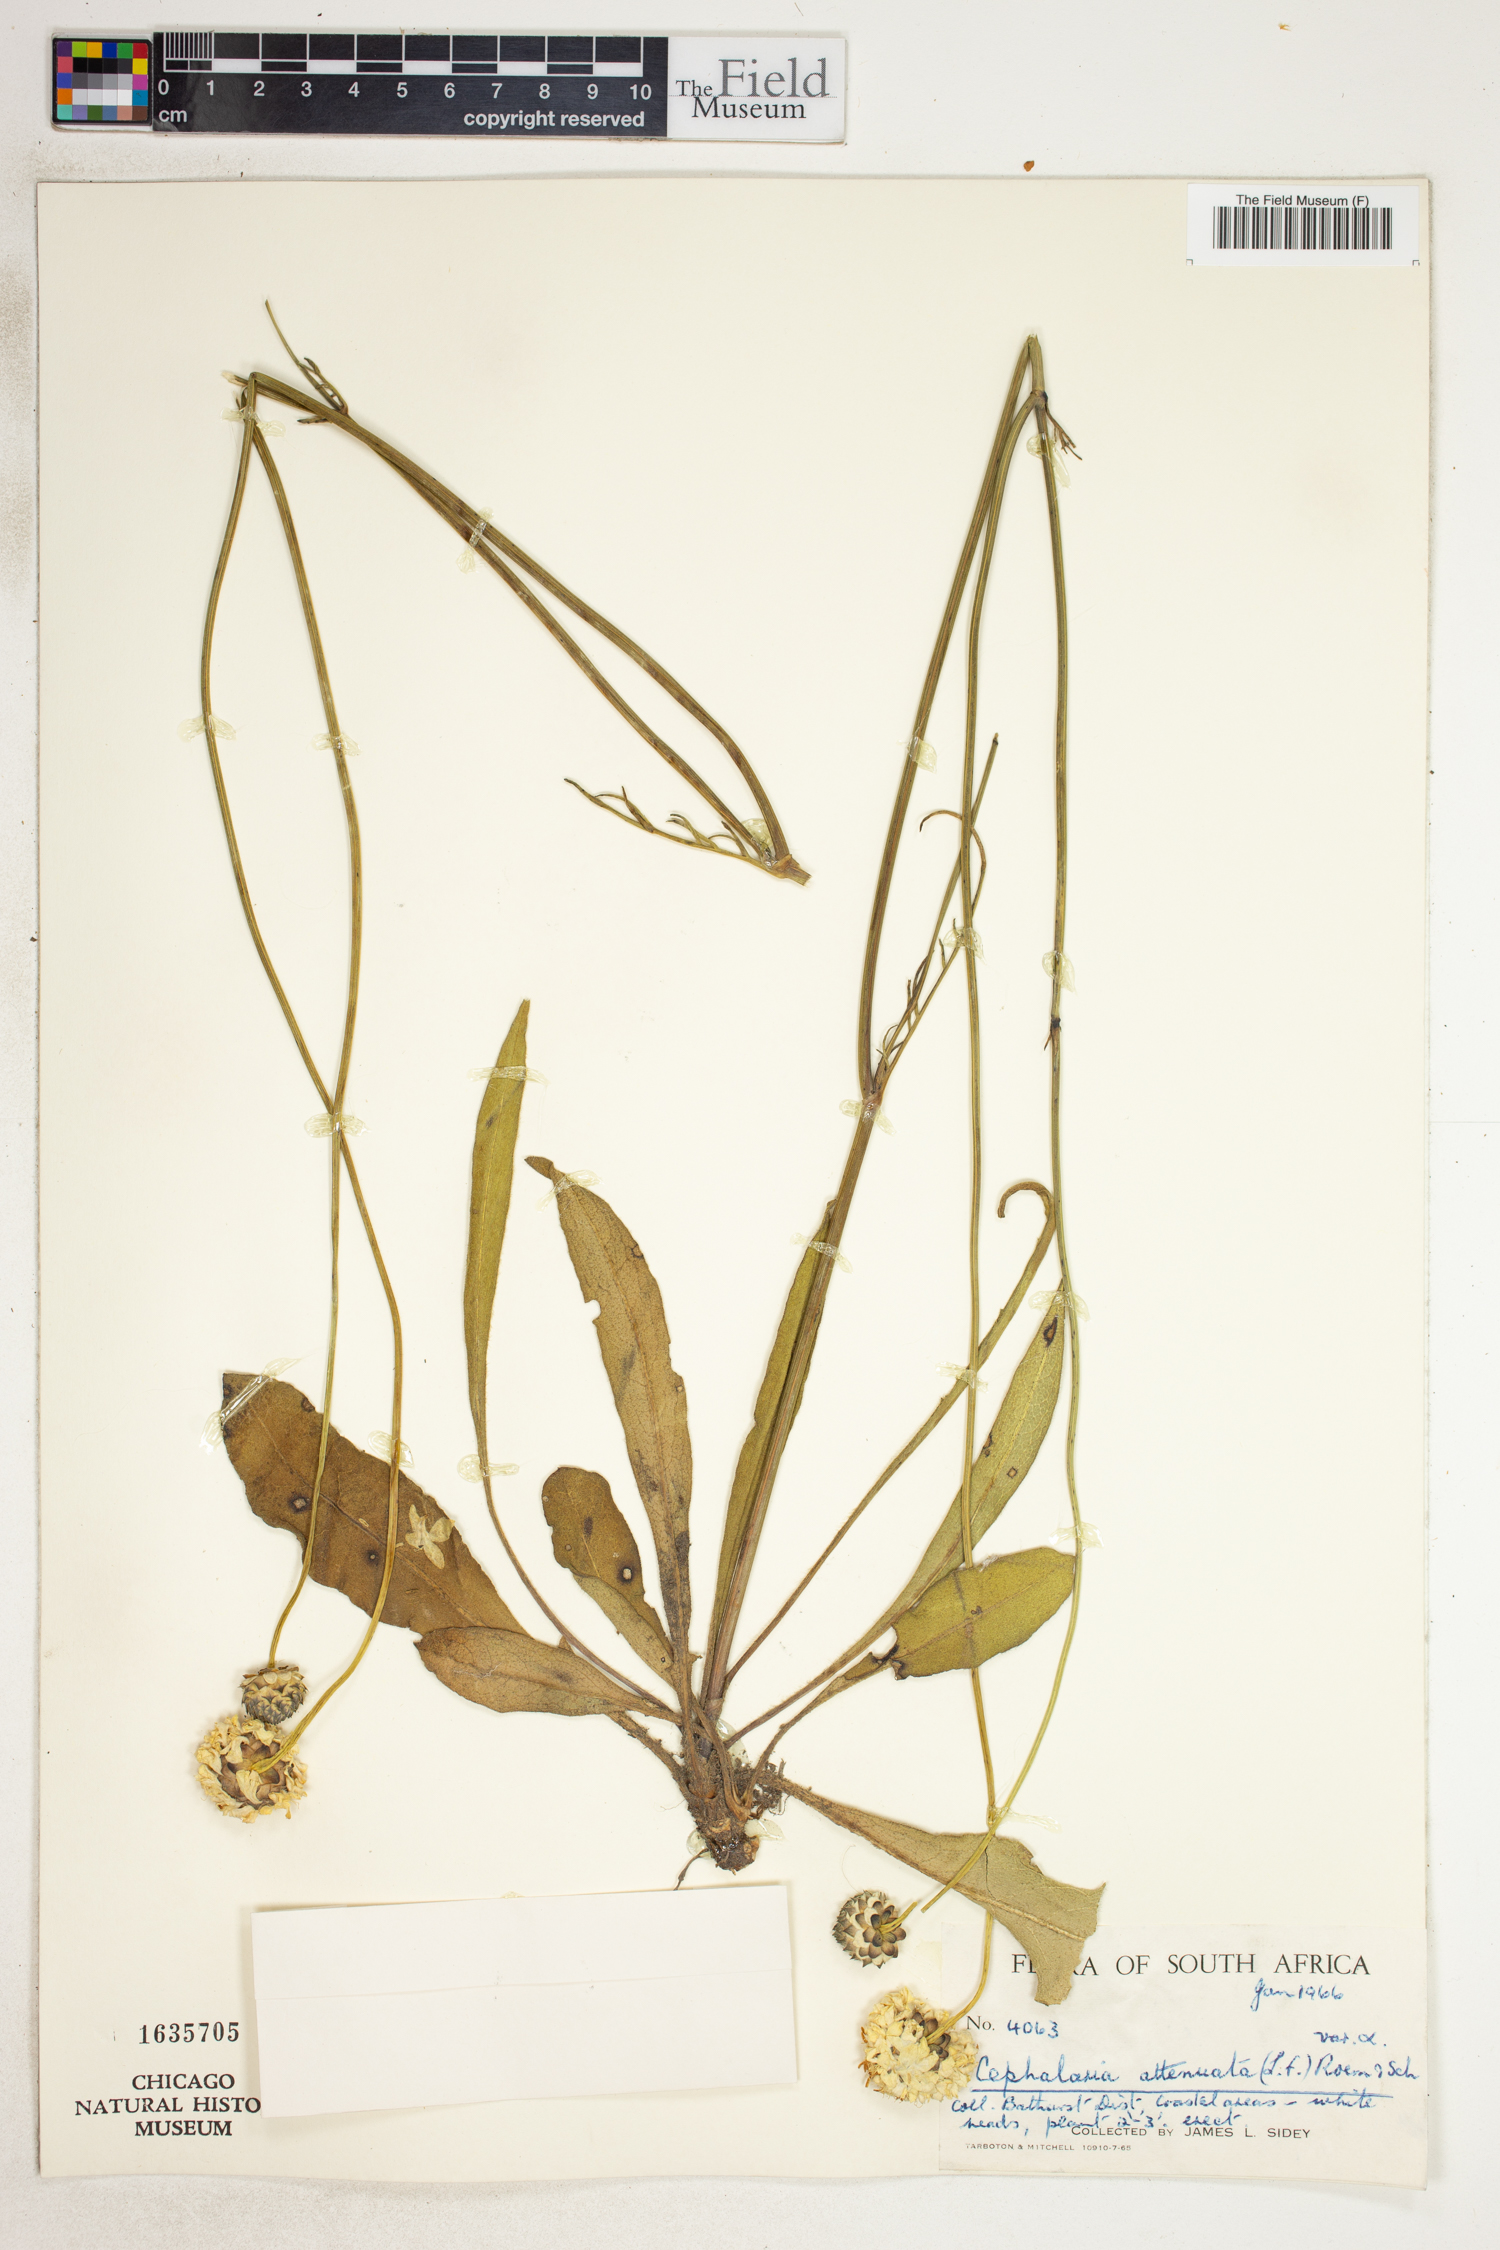 Cephalaria image